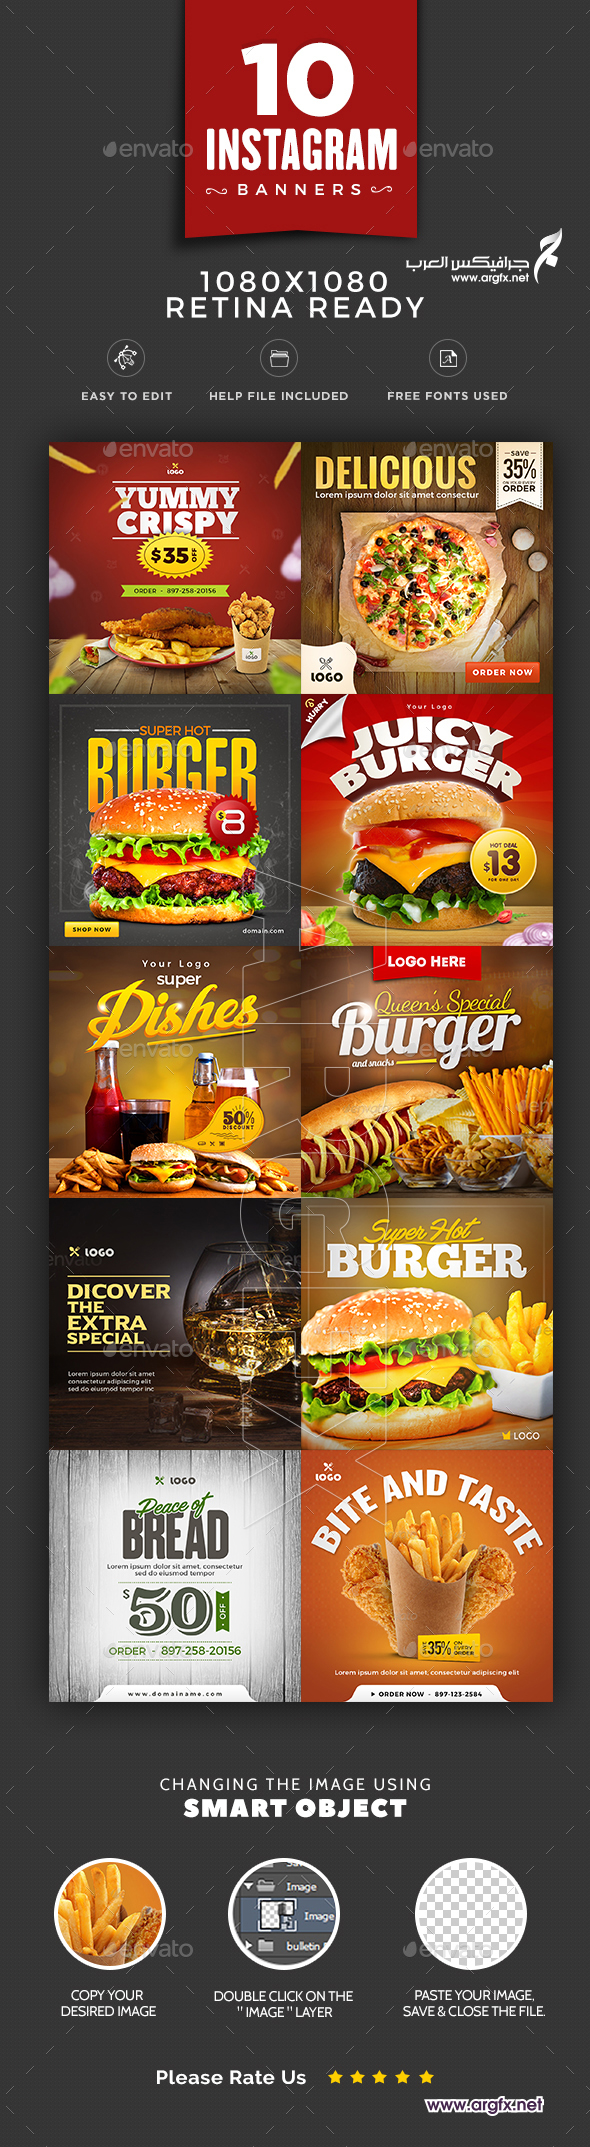 Graphicriver - Restaurant Instagram Designs - 10 Designs 18096514